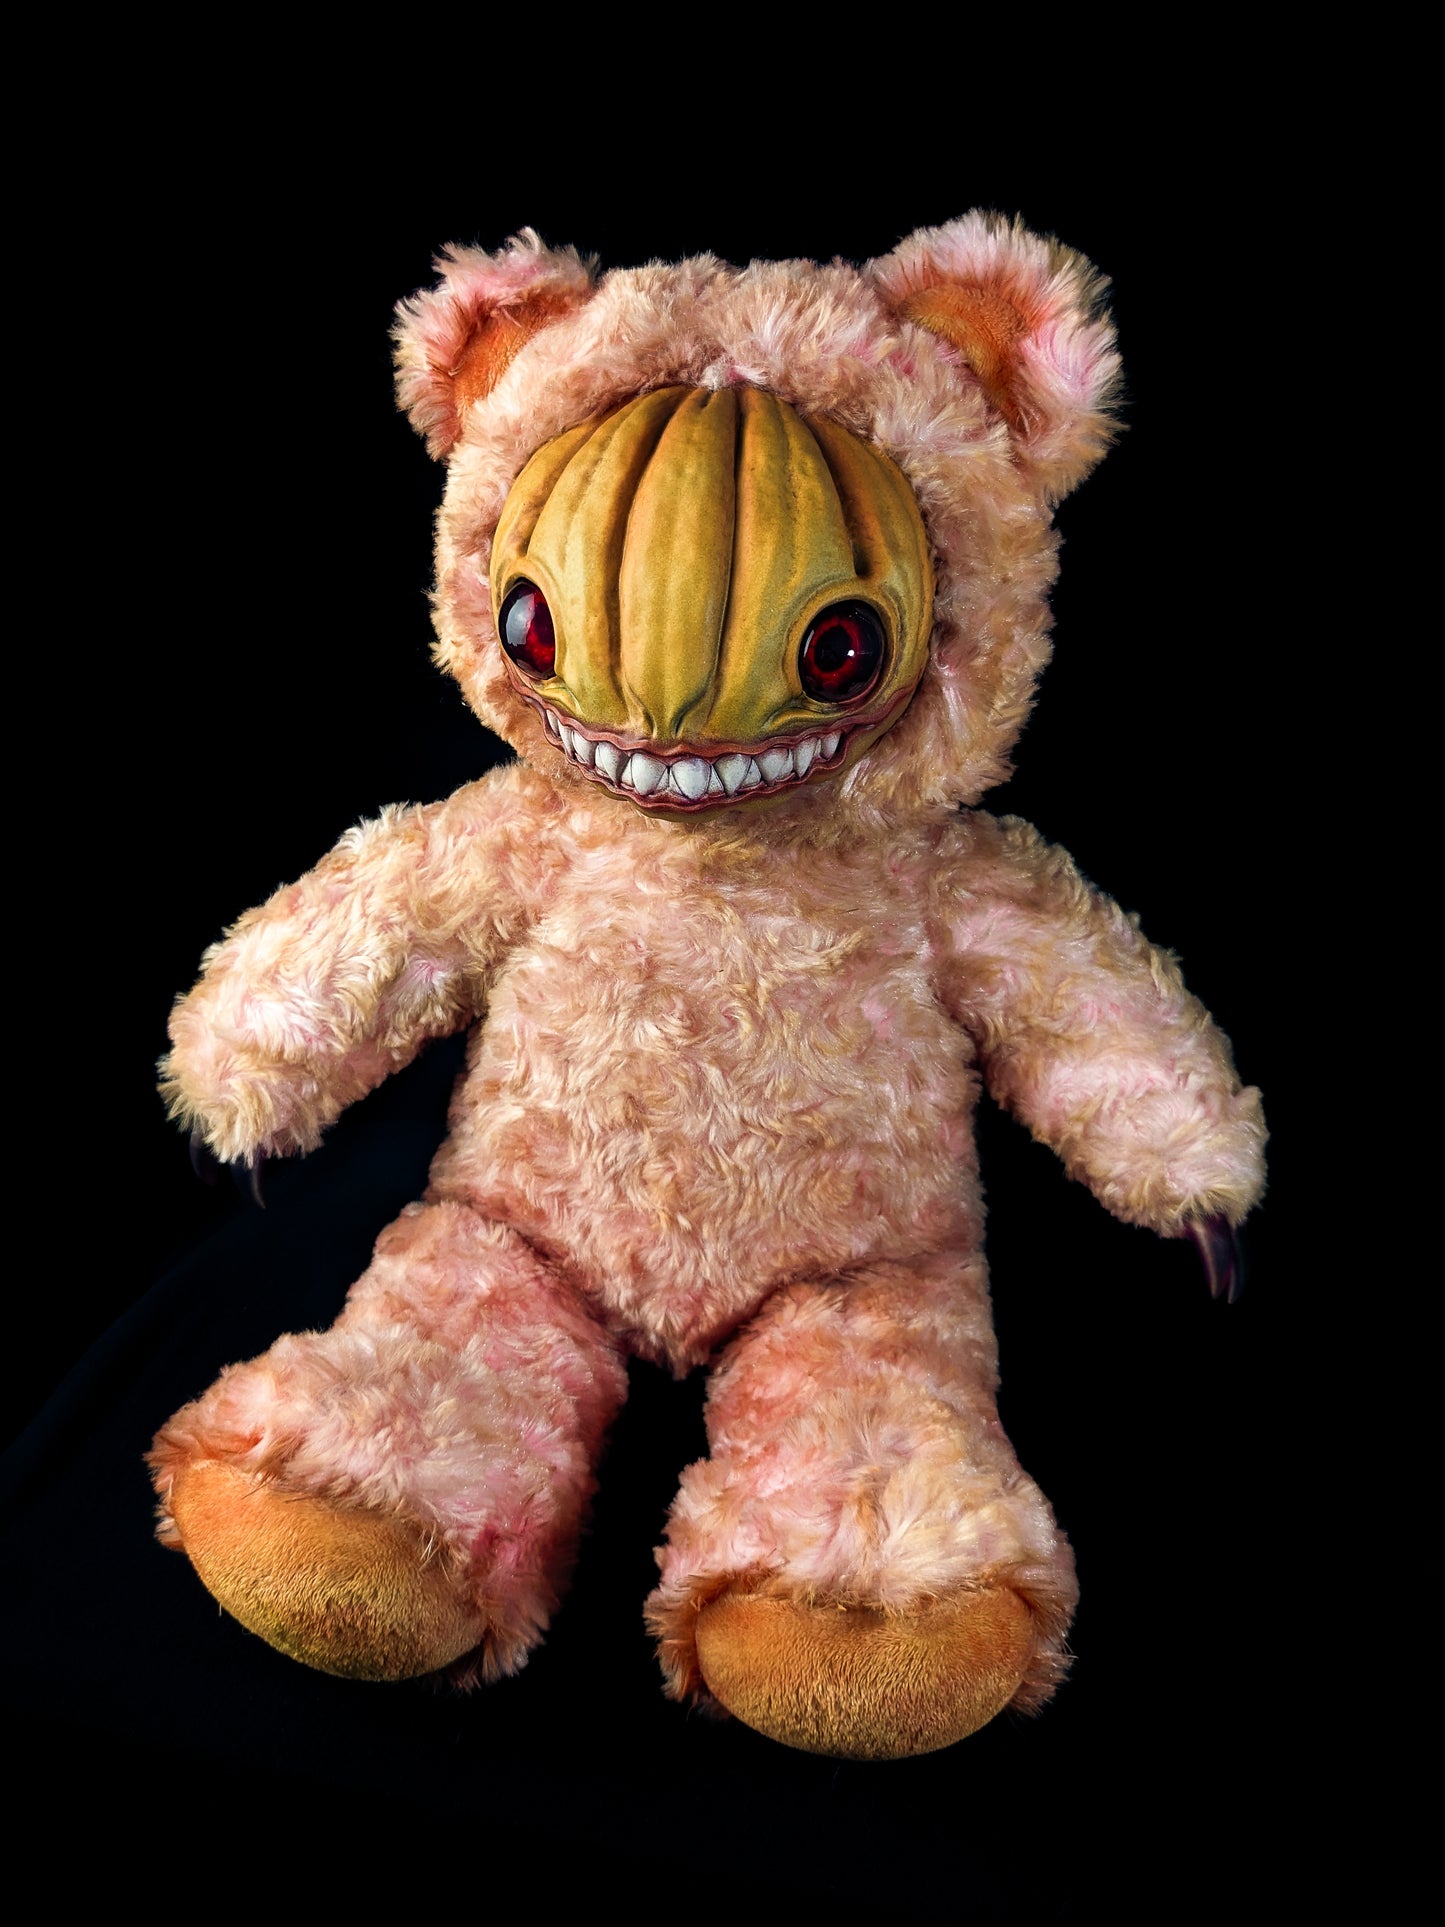 Pumpkin Spite: HAUNTVESTER - CRYPTCRITZ Handcrafted Creepy Cute Halloween Pumpkin Art Doll Plush Toy for Spooky Souls